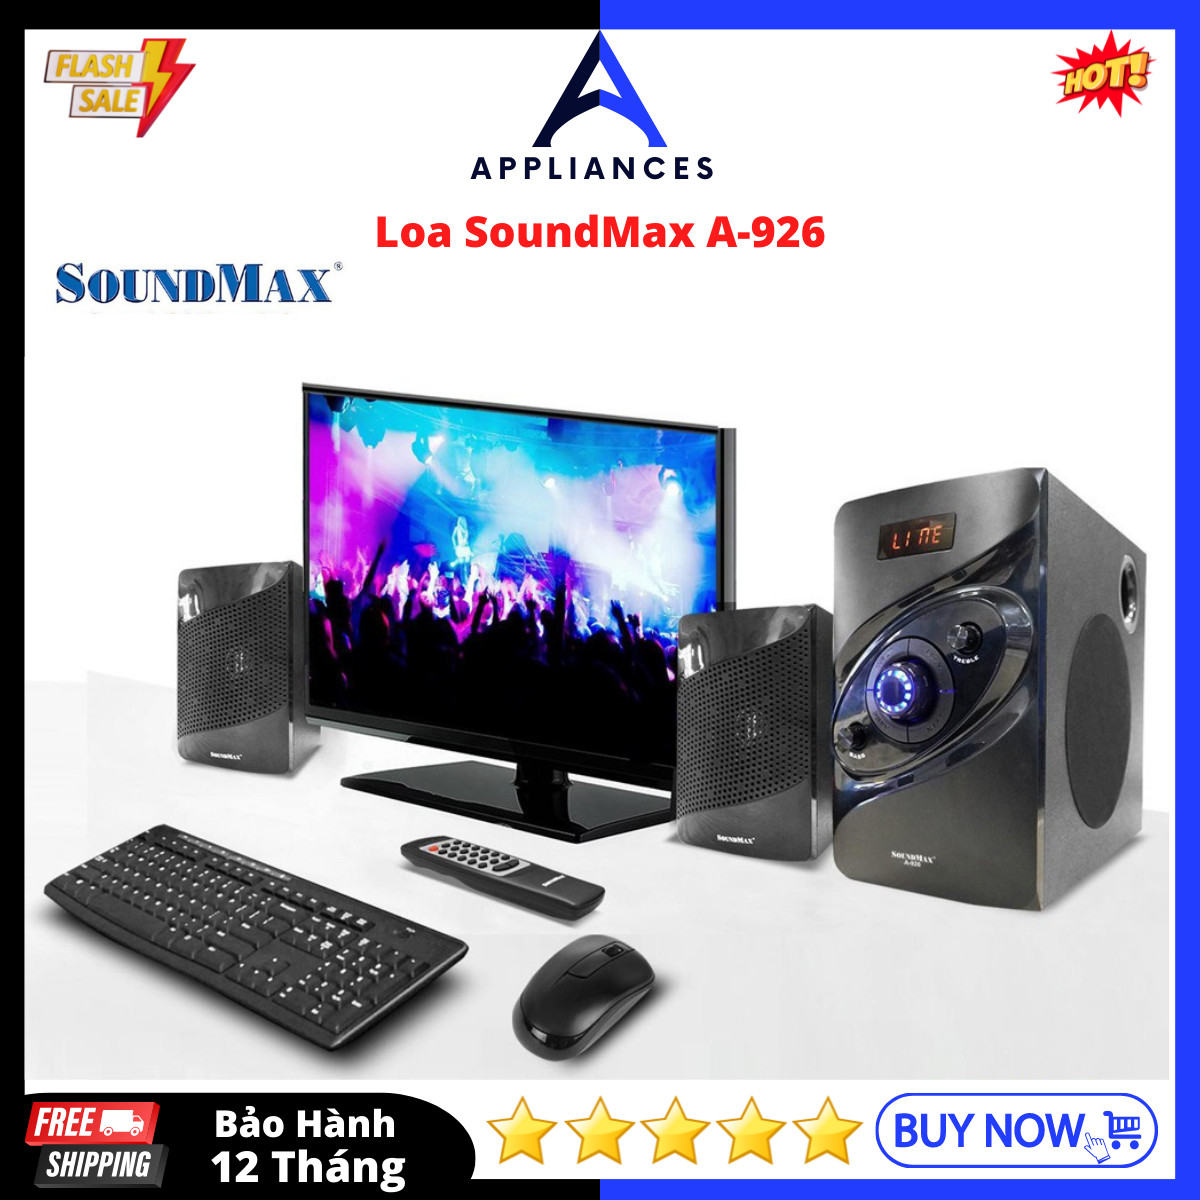 [HCM]  Loa SoundMax A-926 Loa vi tính Soundmax A926/2.1 Loa Bluetooth SoundMax A-926/2.1 LOA SOUNDMAX A926 (2.1) HỖ TRỢ BLUETOOTH USB Loa SoundMax A926 2.1 Bluetooth LOA SOUNDMAX A926/2.1 BLUETOOTH CHÍNH HÃNG Loa Soundmax A926 (2.1)